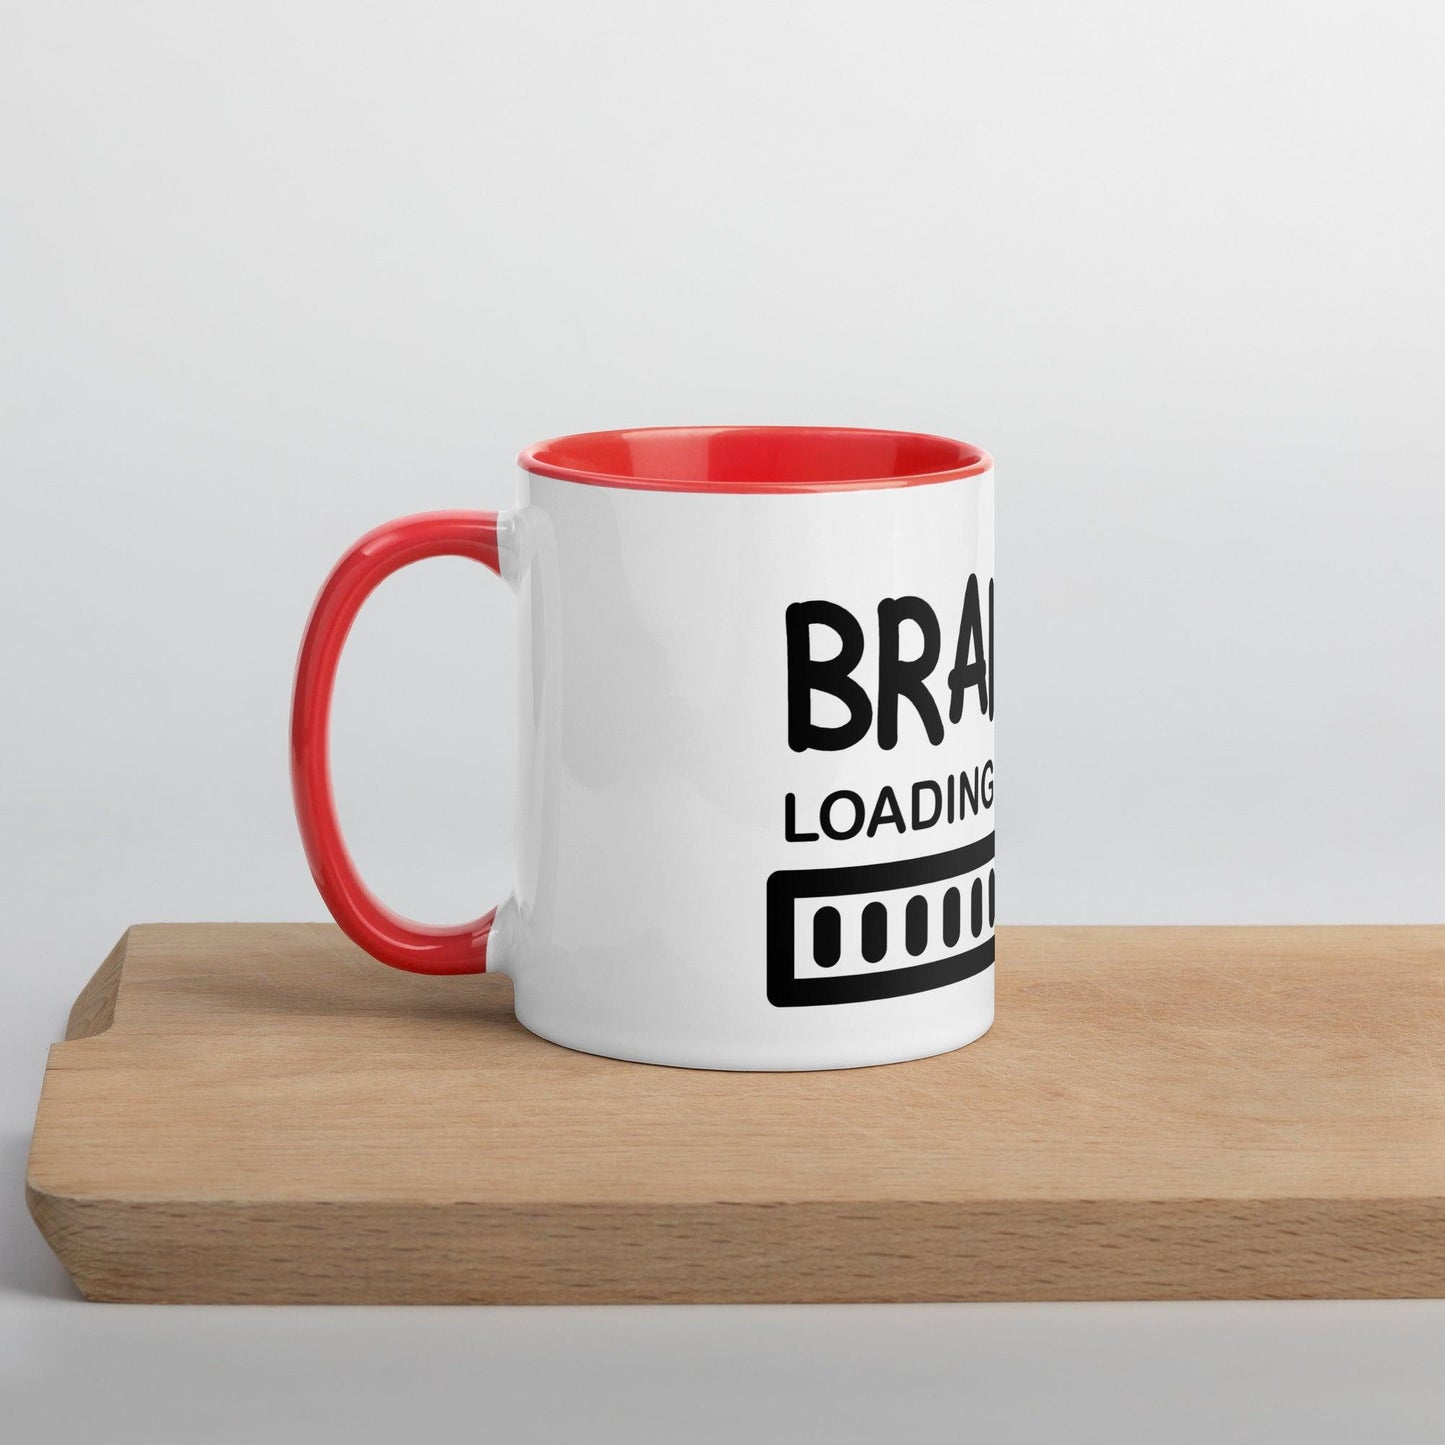 Brain loading coffee mug